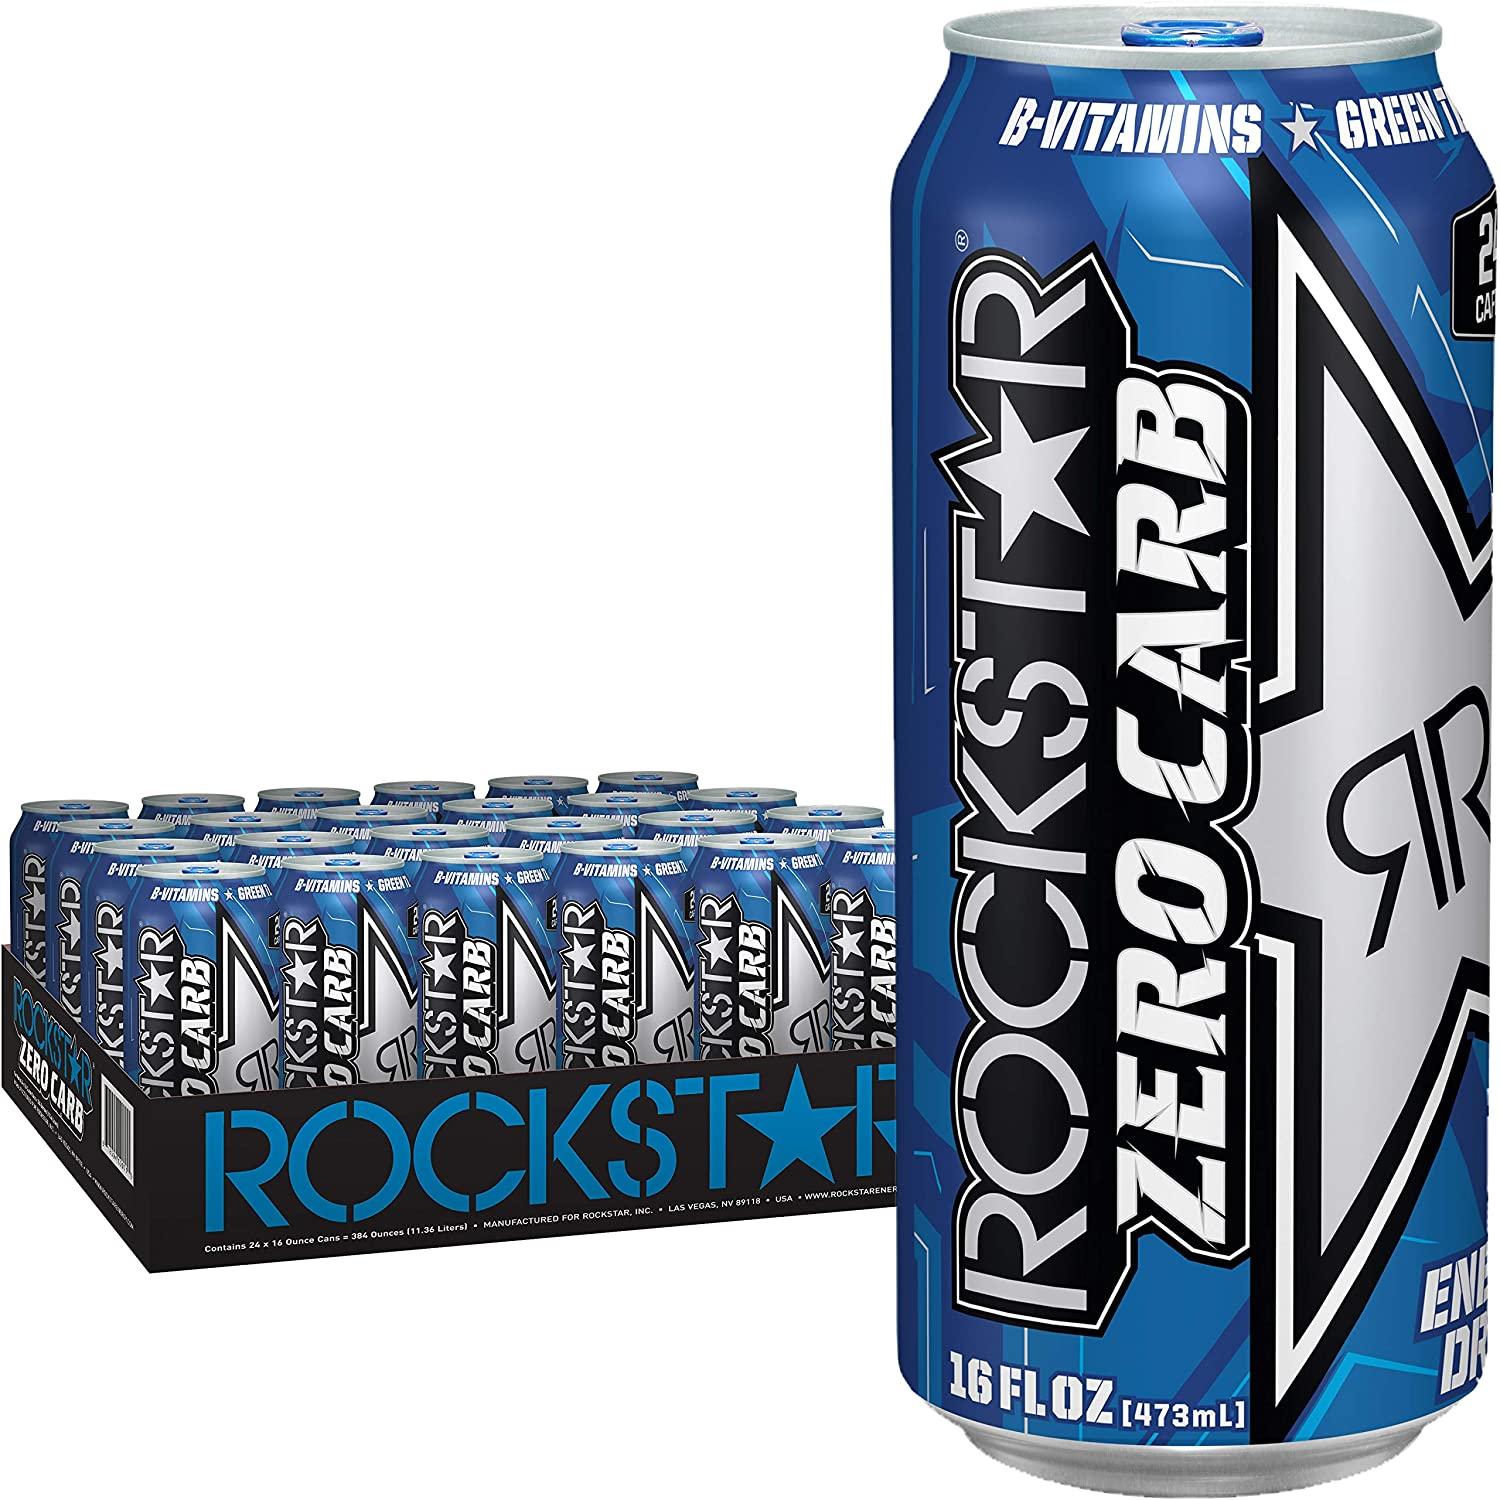 24 Rockstar Energy Drink for $24